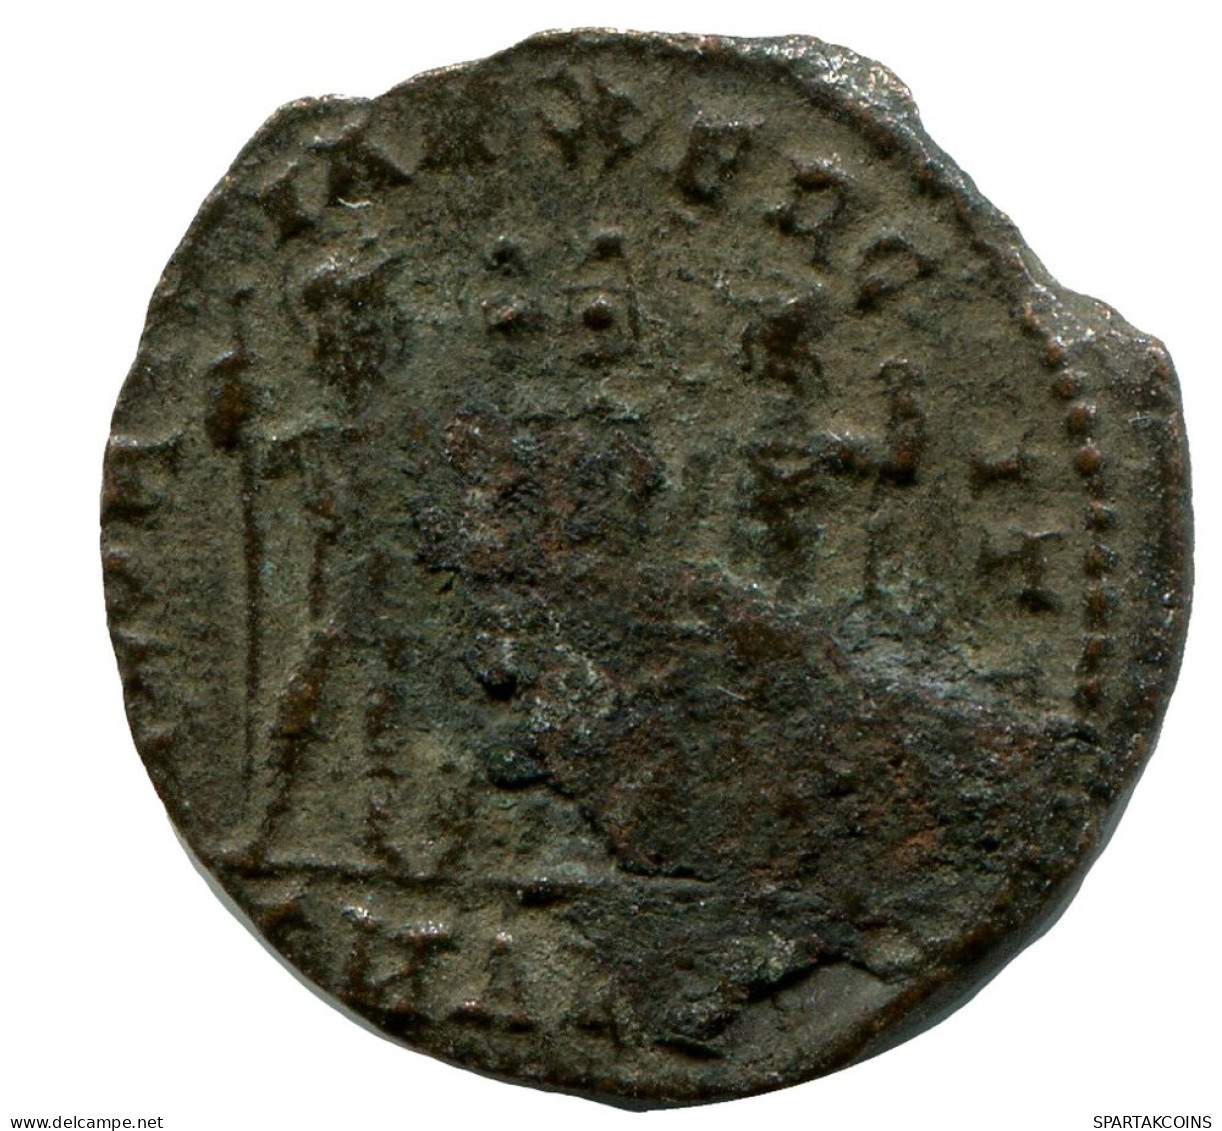 CONSTANTIUS II MINTED IN ALEKSANDRIA FOUND IN IHNASYAH HOARD #ANC10435.14.E.A - The Christian Empire (307 AD Tot 363 AD)